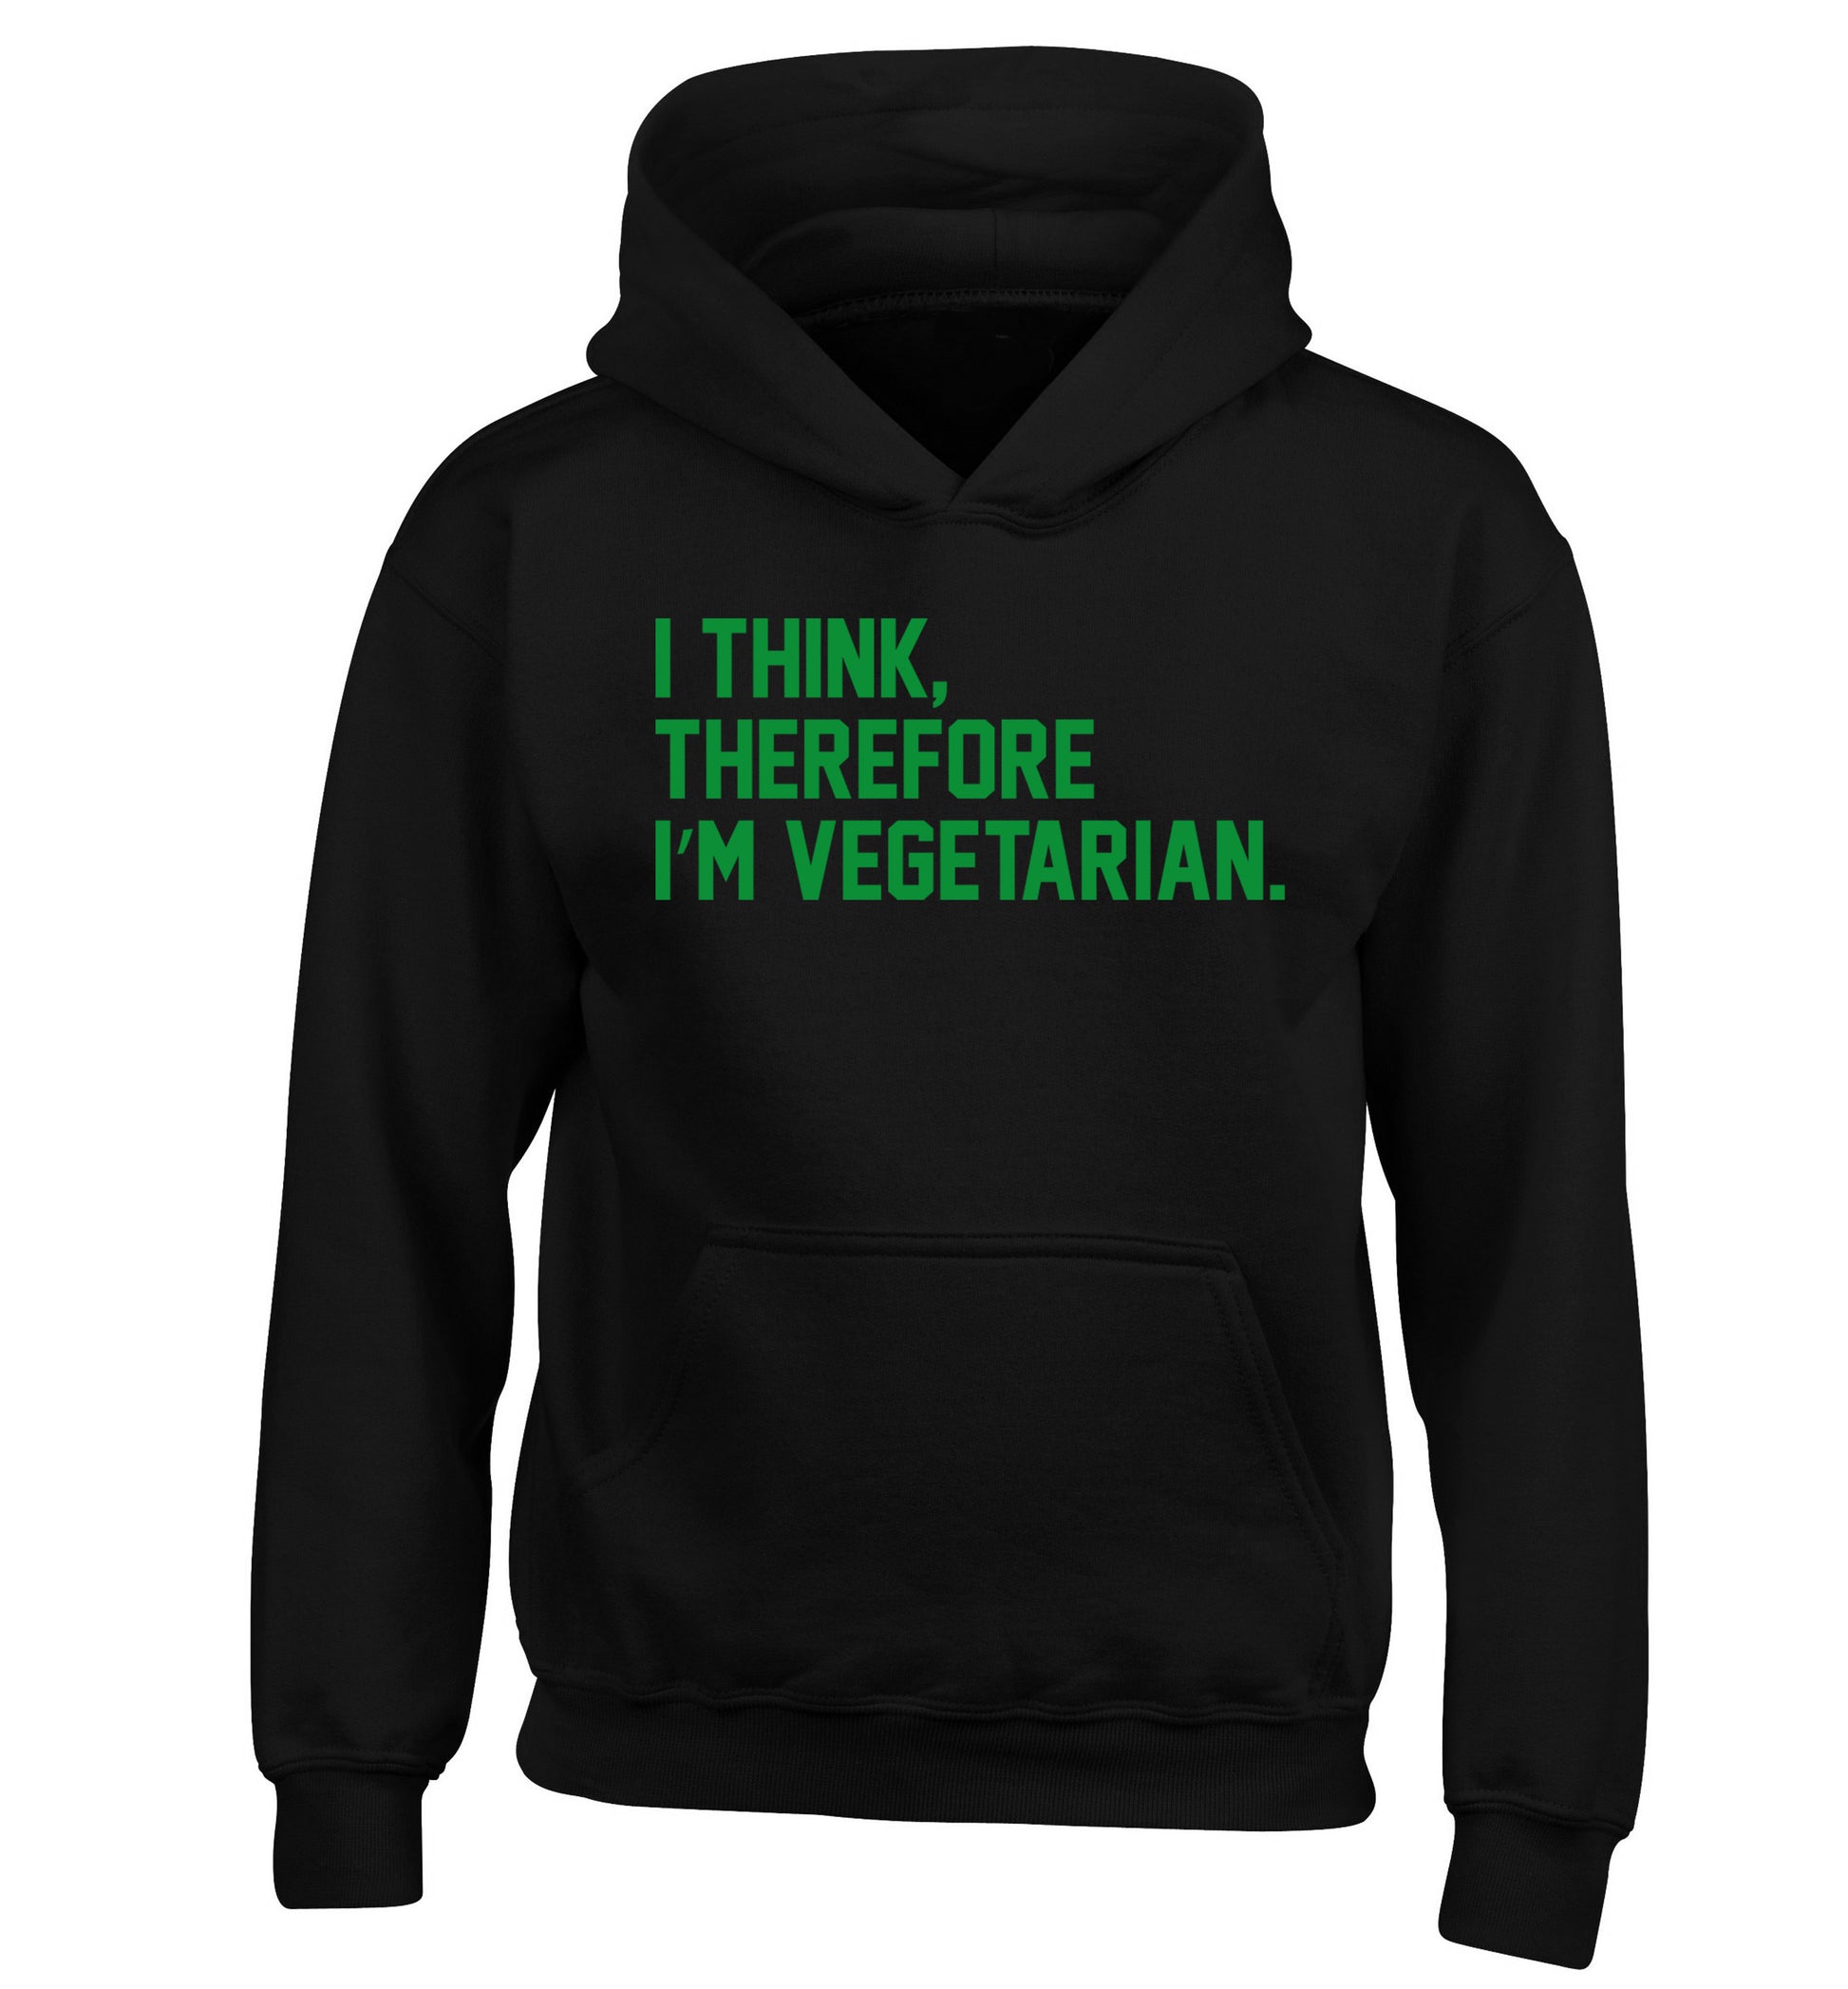 I think therefore I'm vegetarian children's black hoodie 12-14 Years